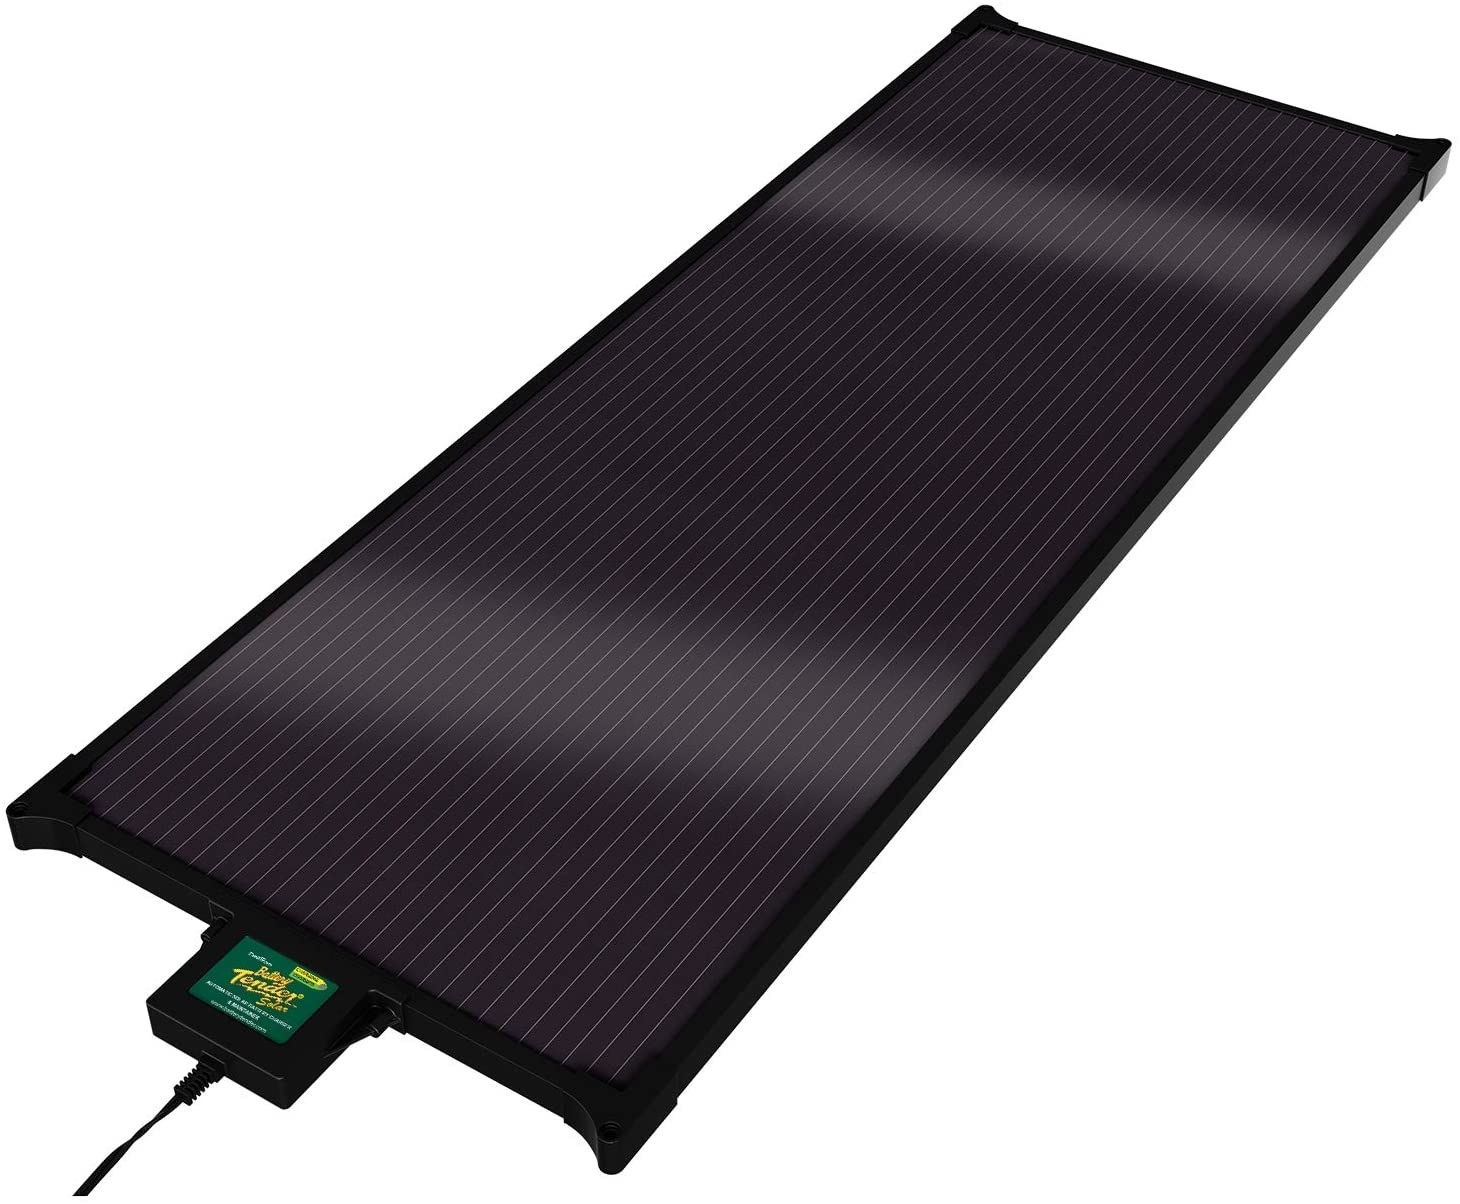 The rectangle solar panel in black